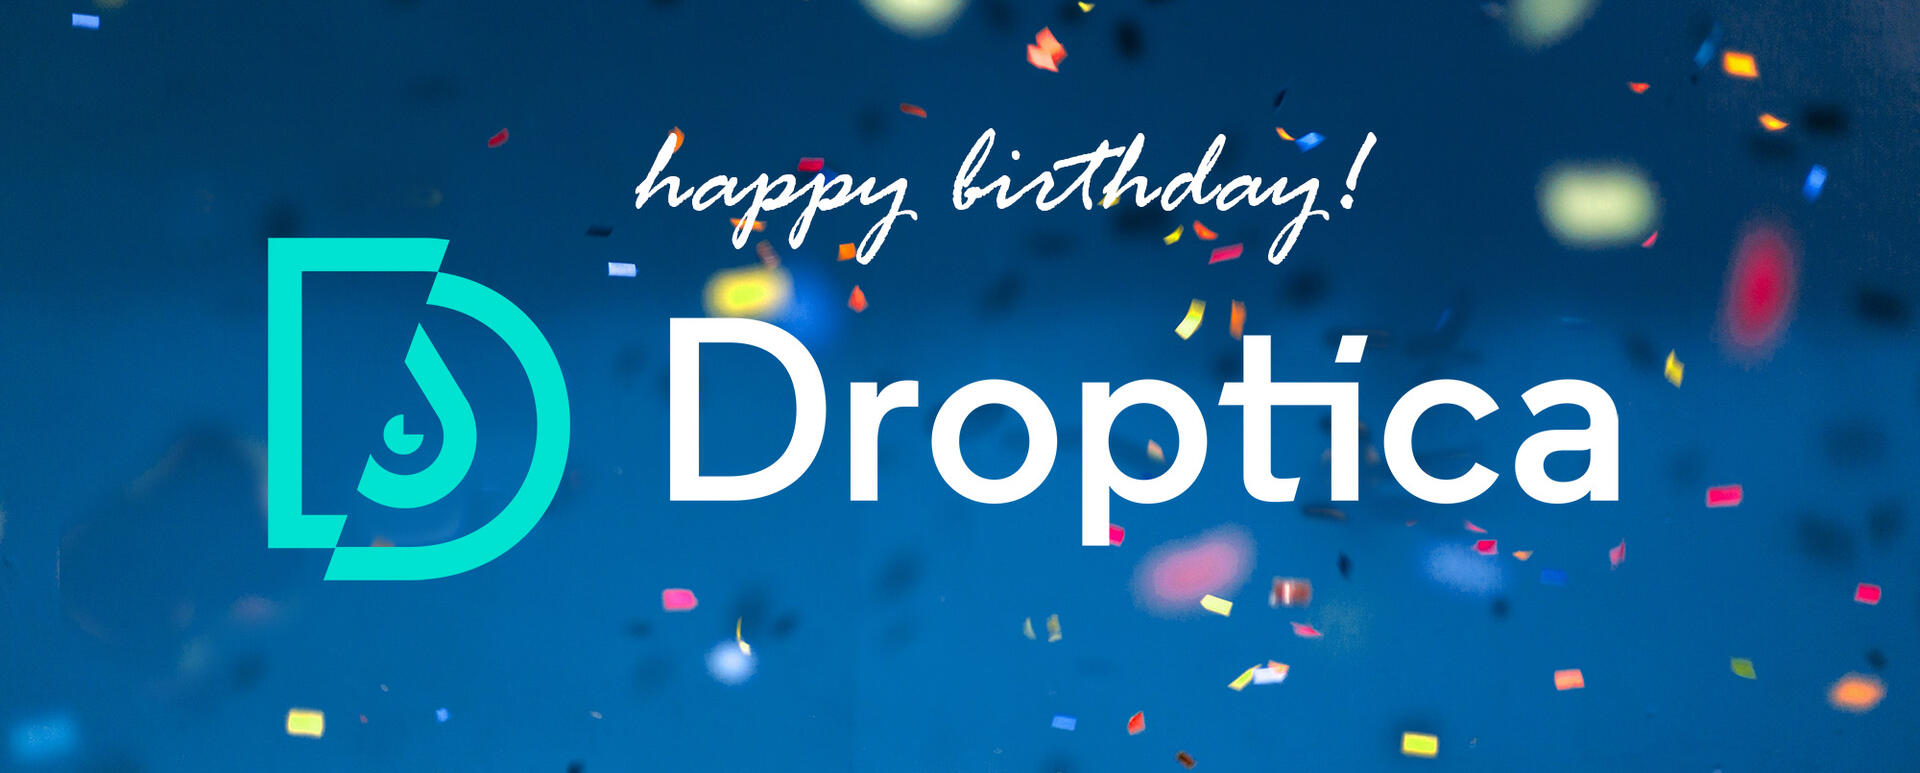 Droptica Birthday Photo